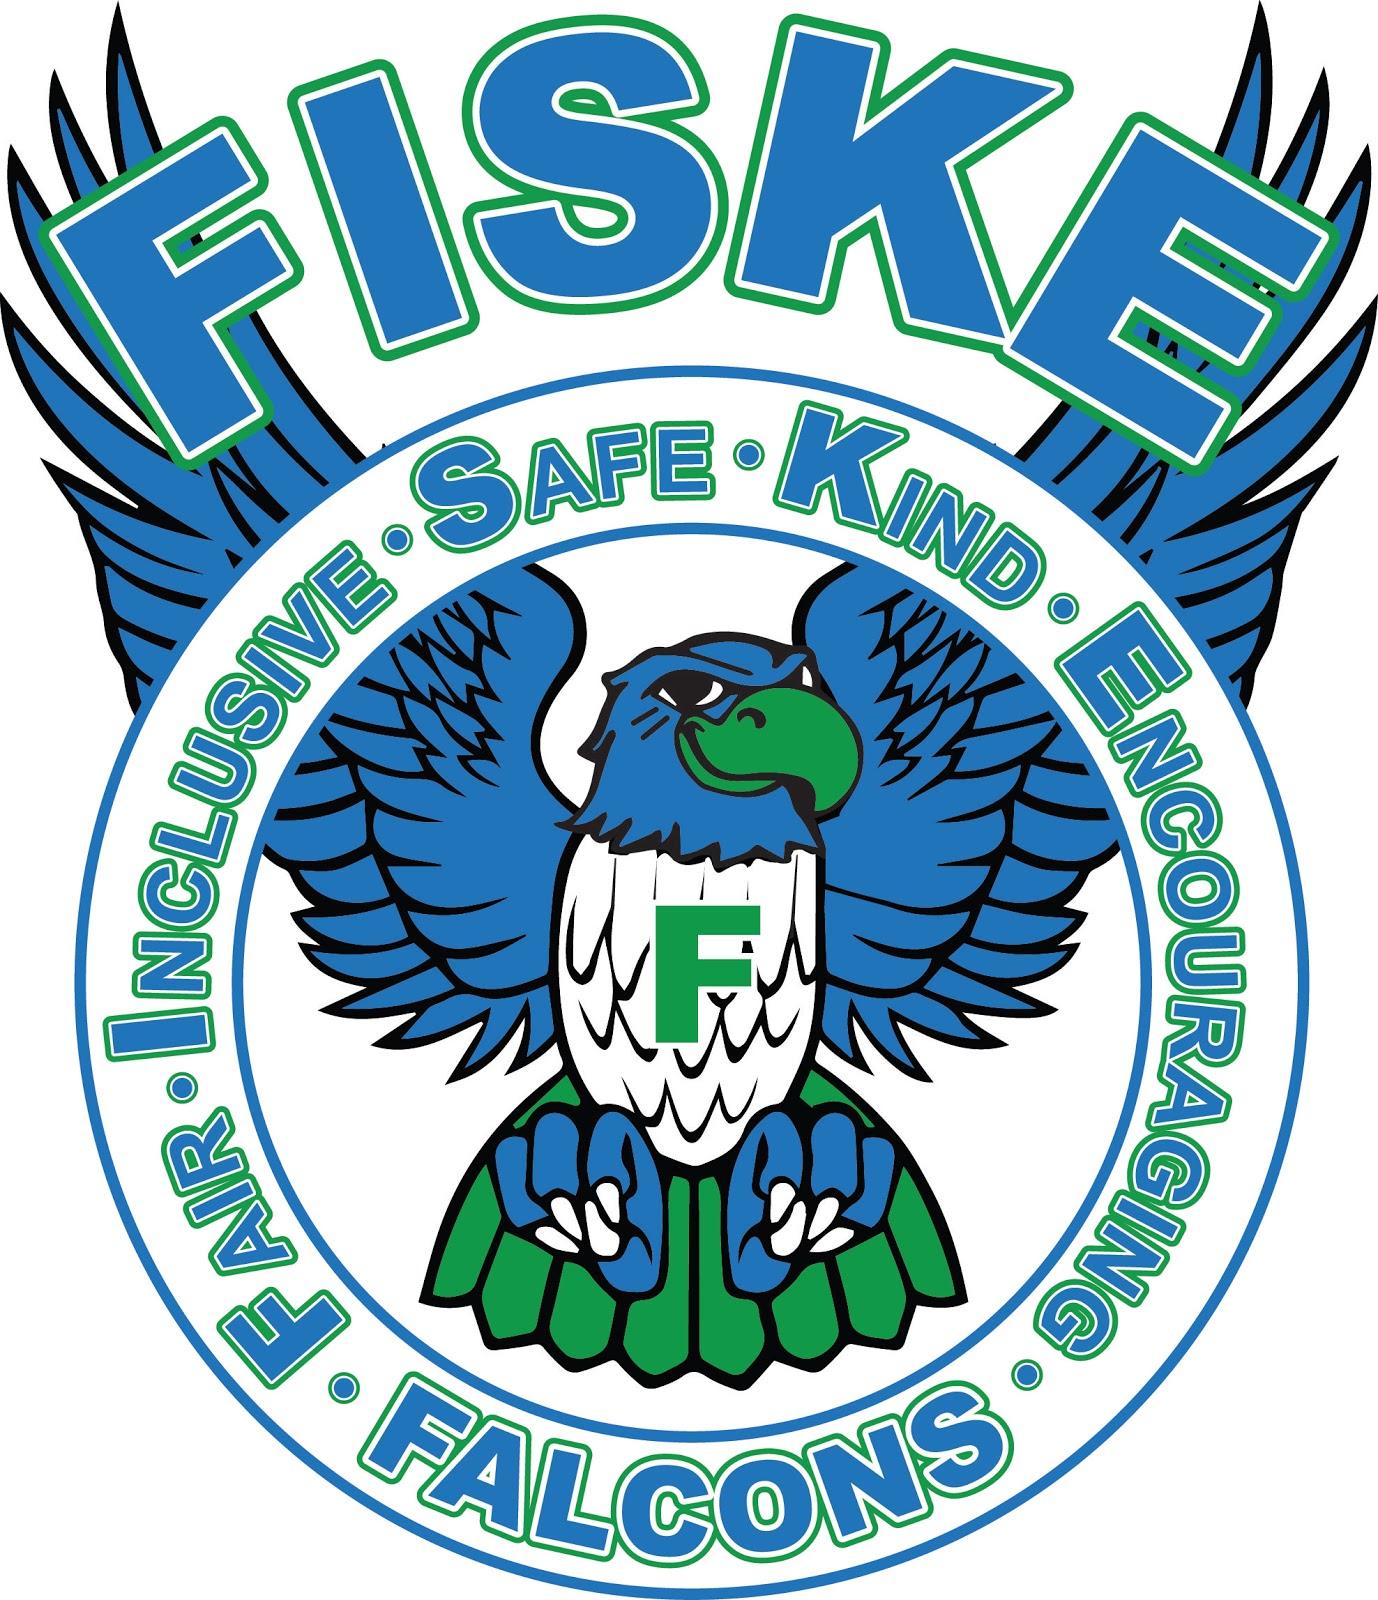 Fiske Falcon logo 